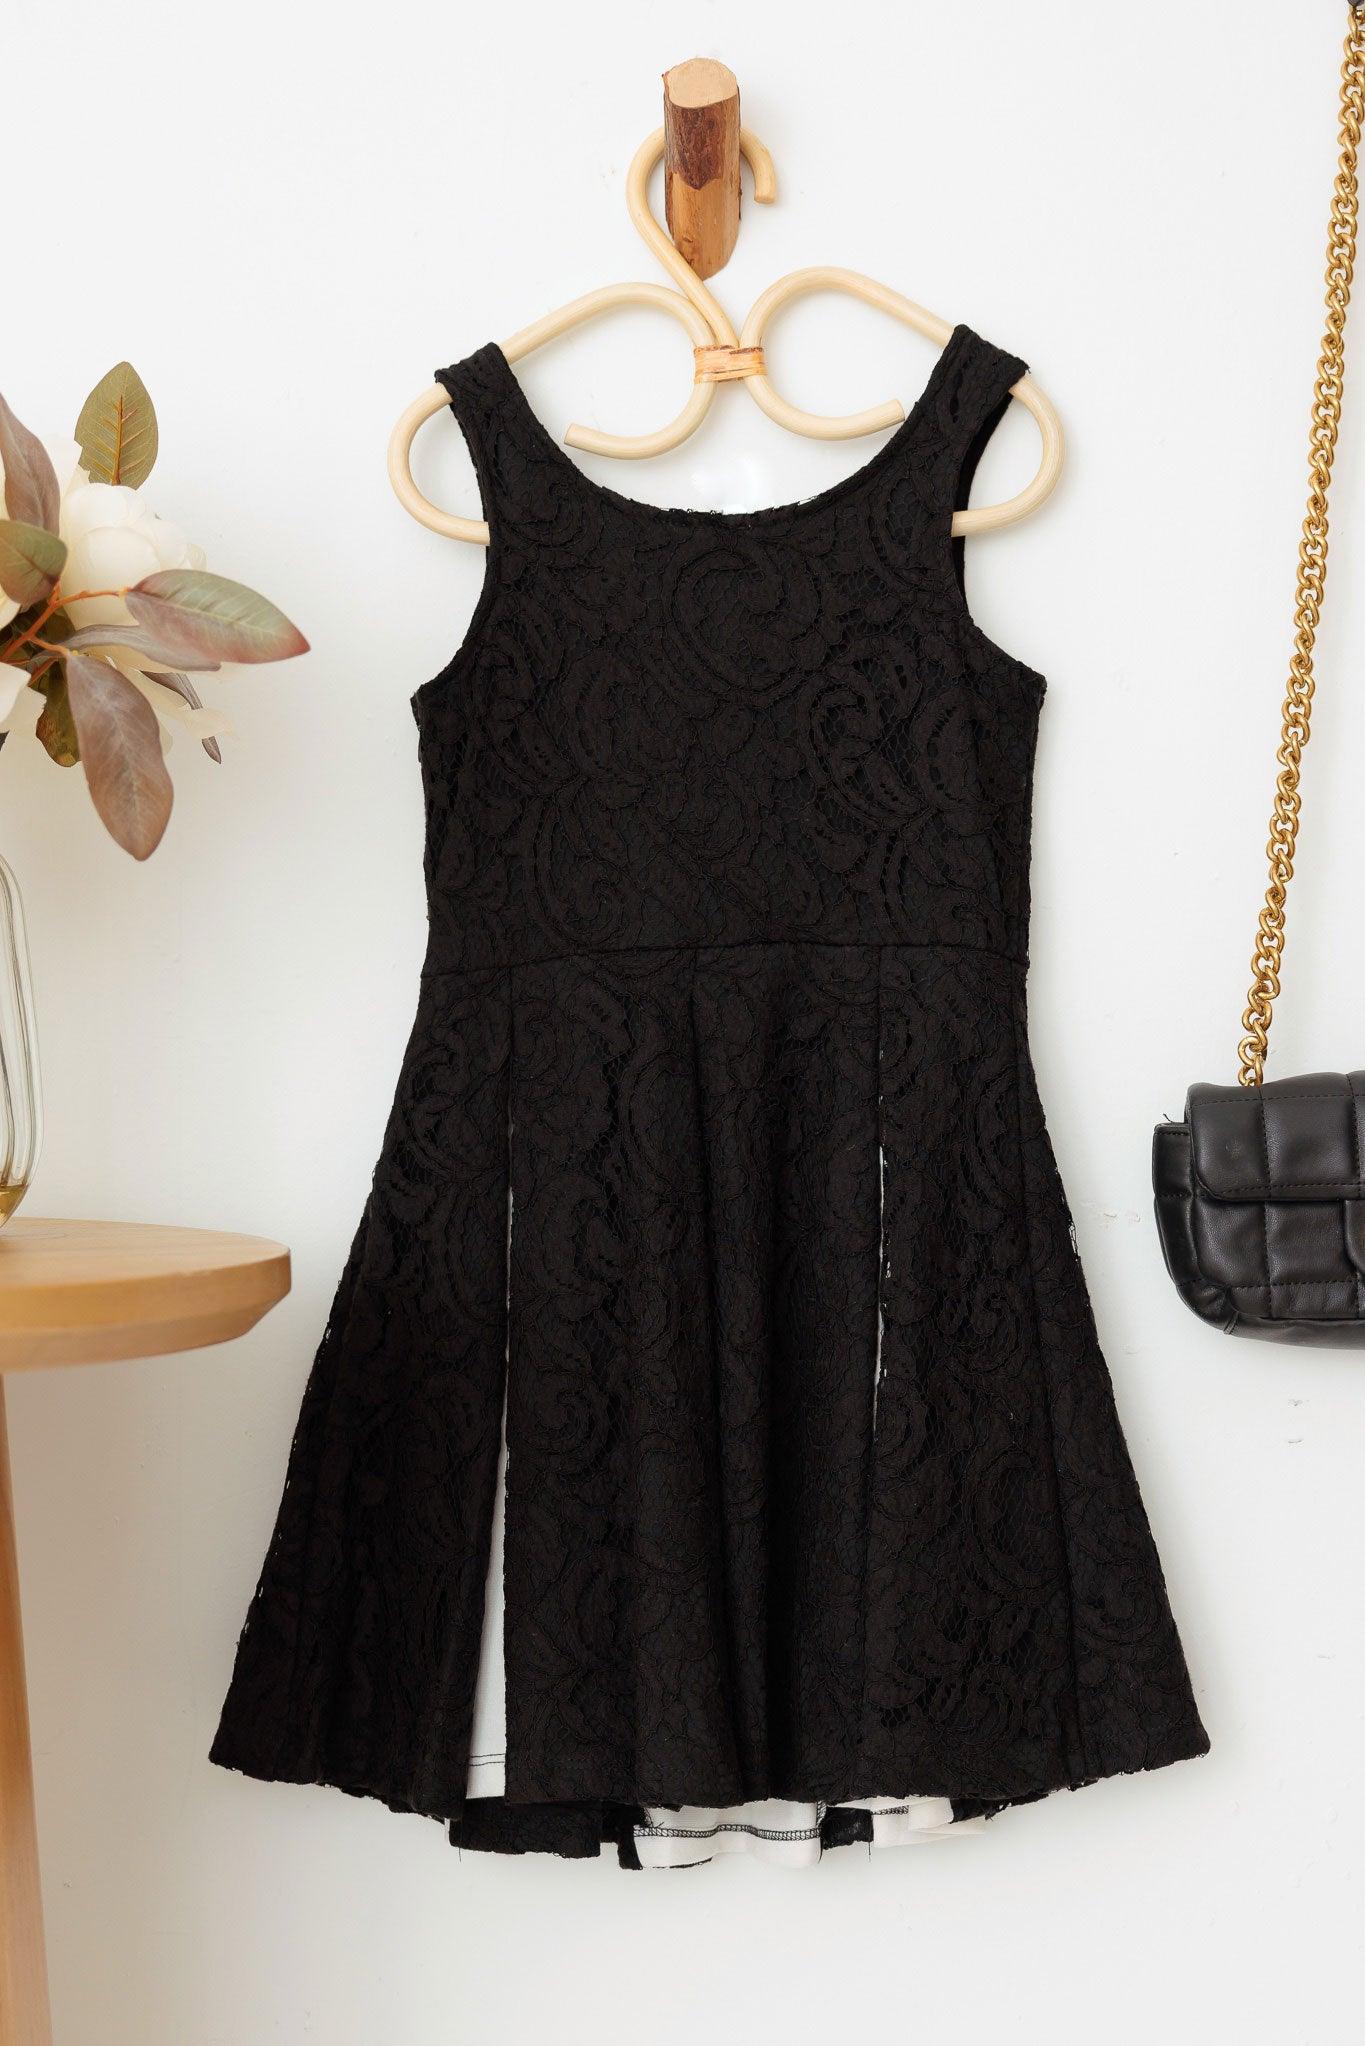 Girls Lace Black & White Hem A-line Silhouette Dress